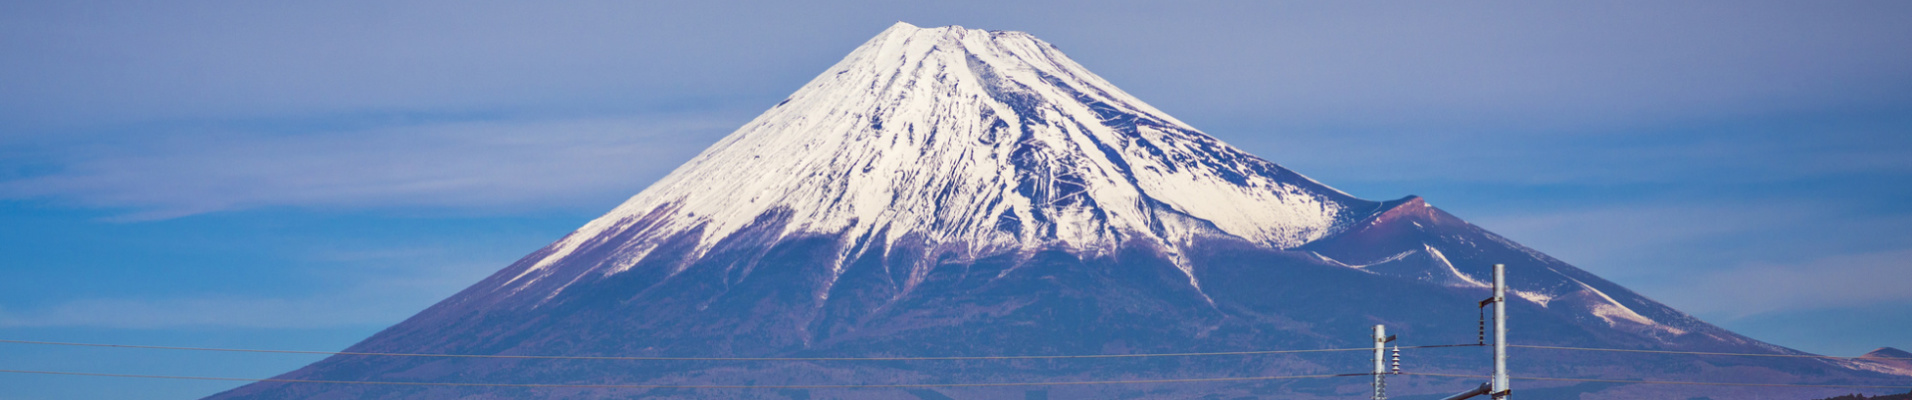 Shinkansen devait le Mont Fuji